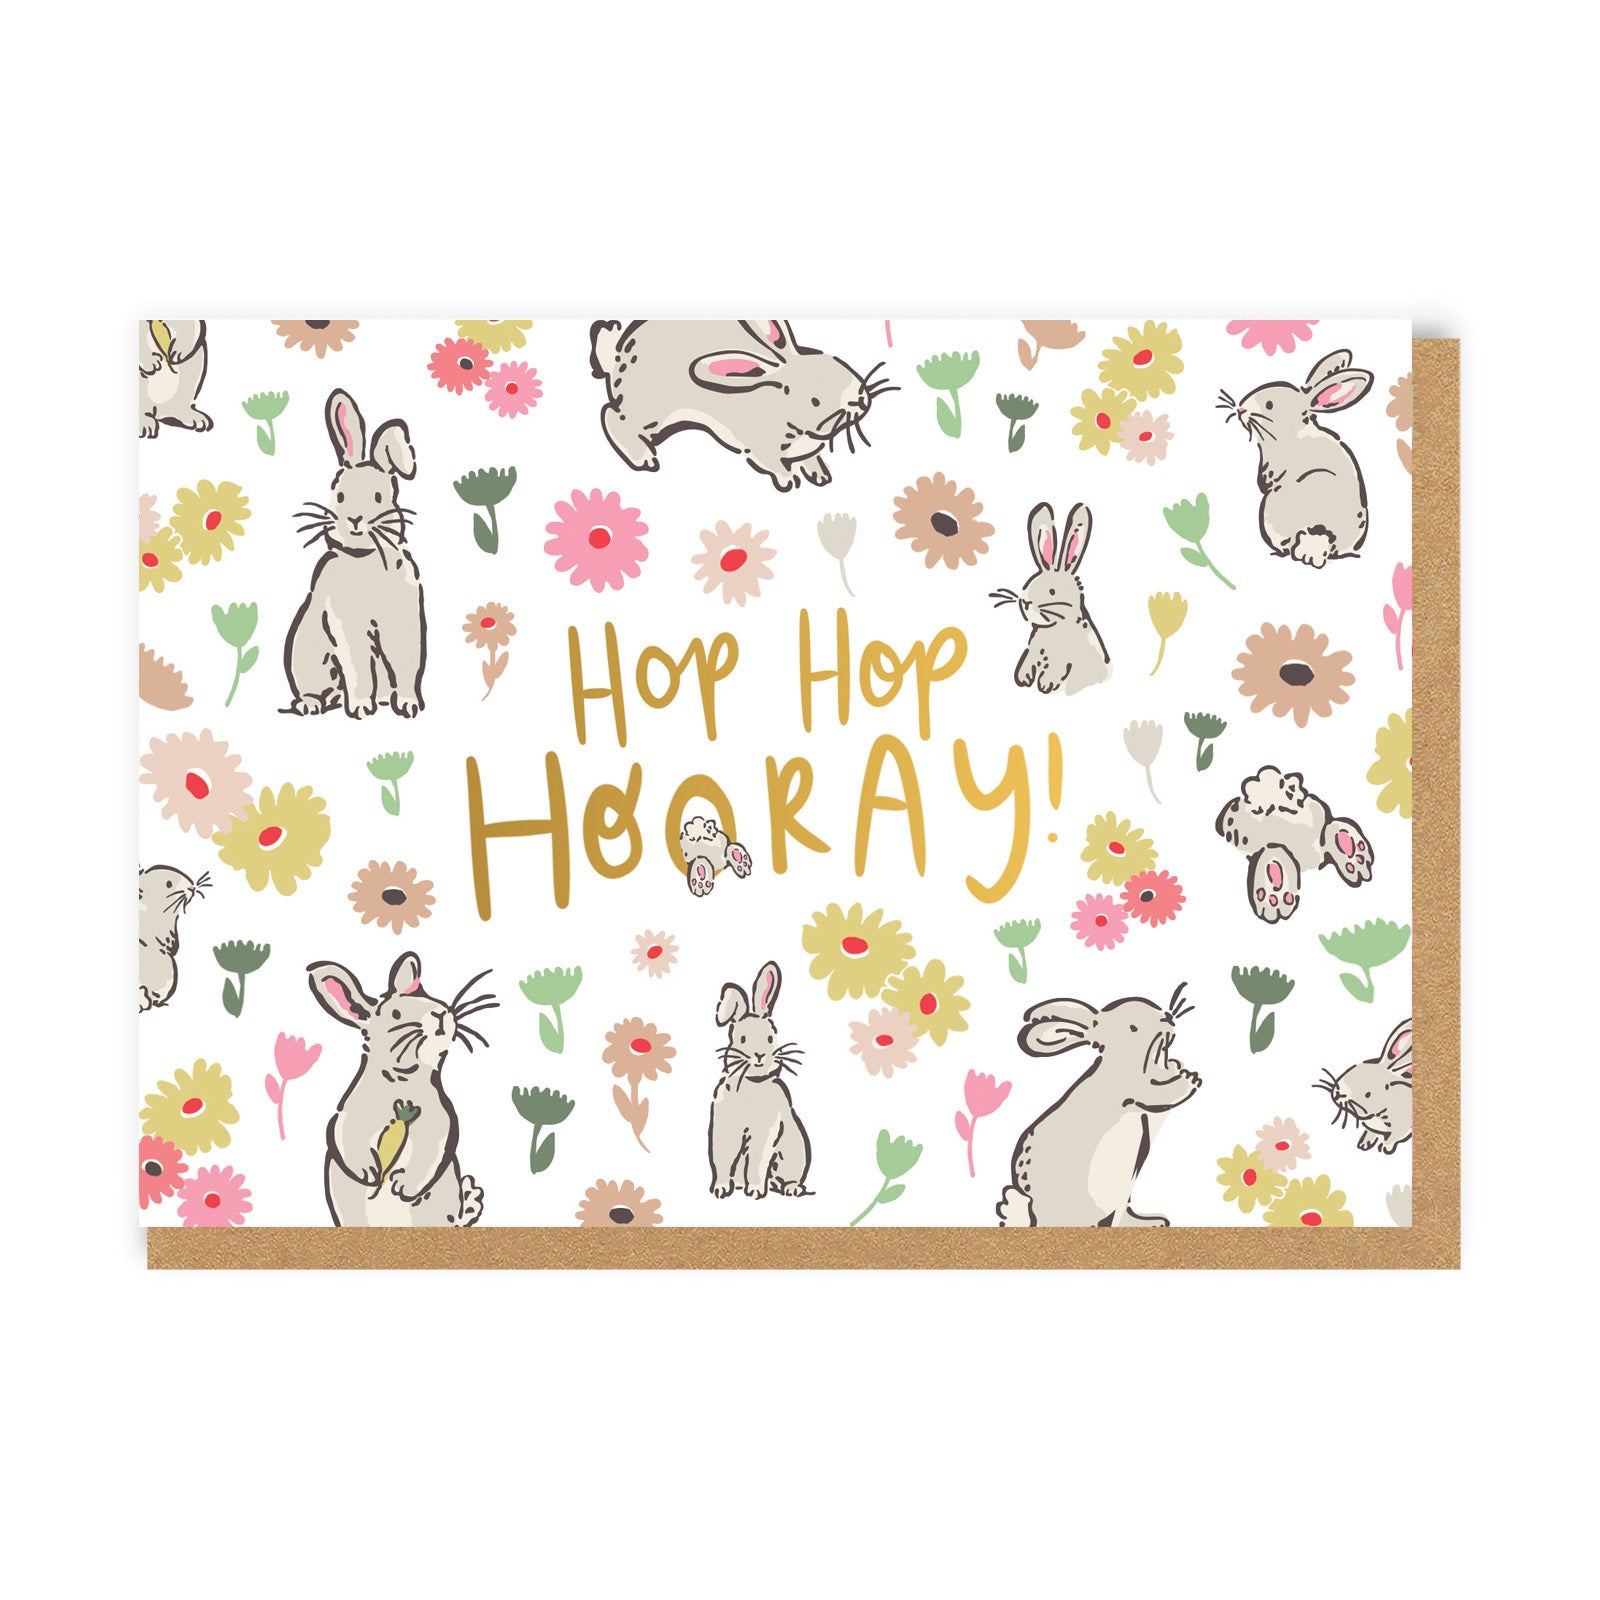 Hop Hop Hooray Cath Kidston Easter Card by penny black